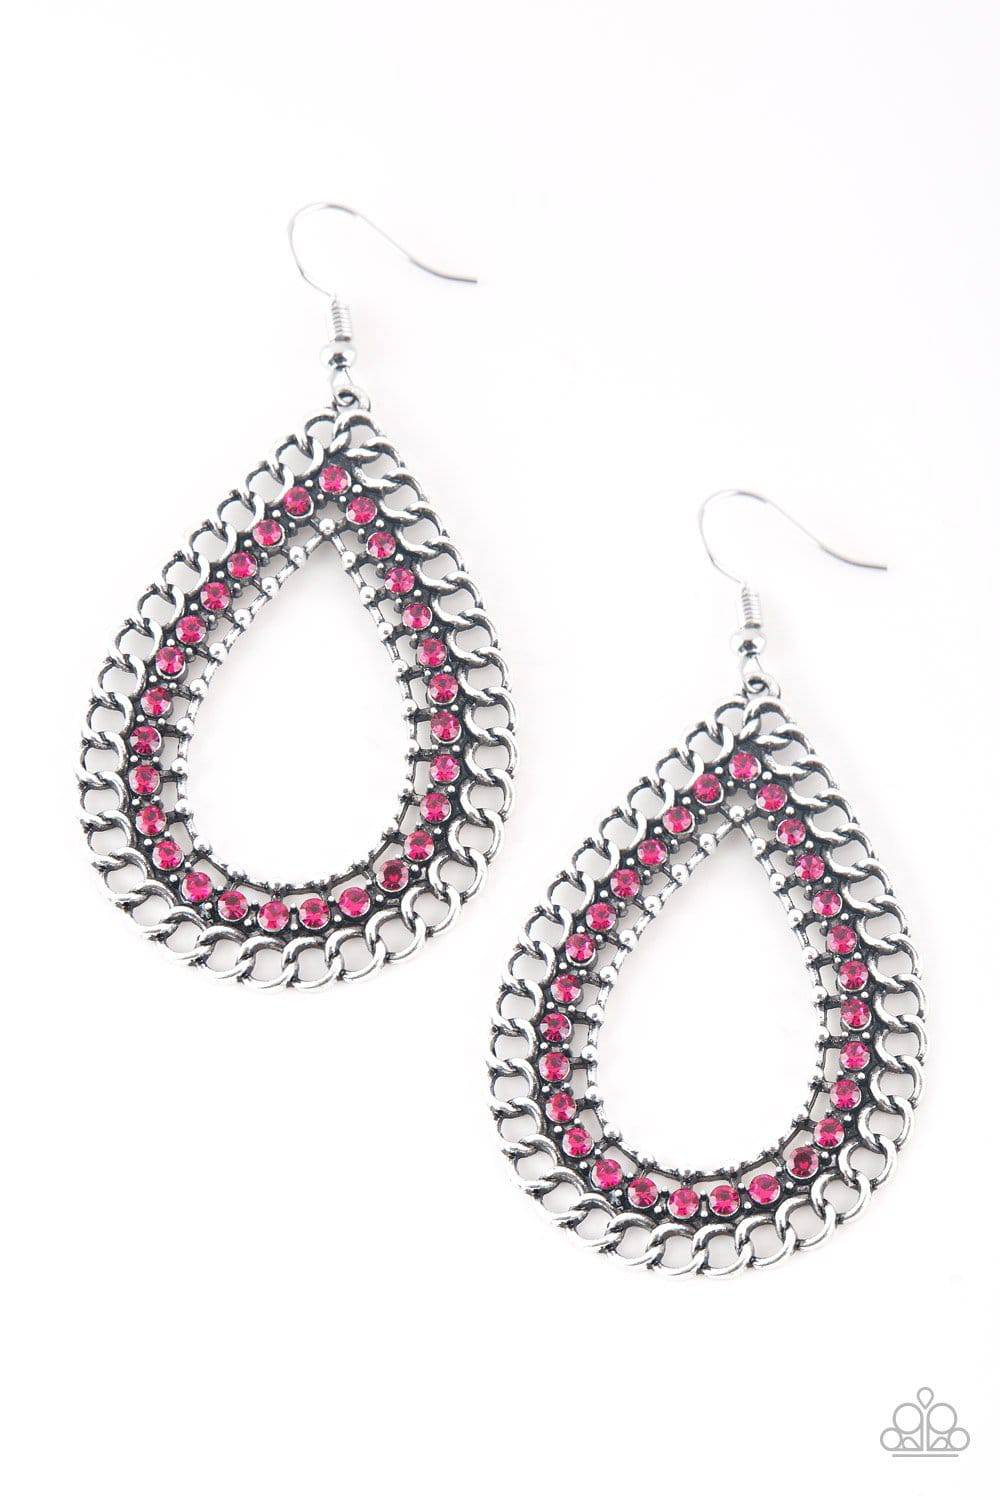 Mechanical Marvel - Pink Rhinestone Earrings - Paparazzi Accessories - GlaMarous Titi Jewels